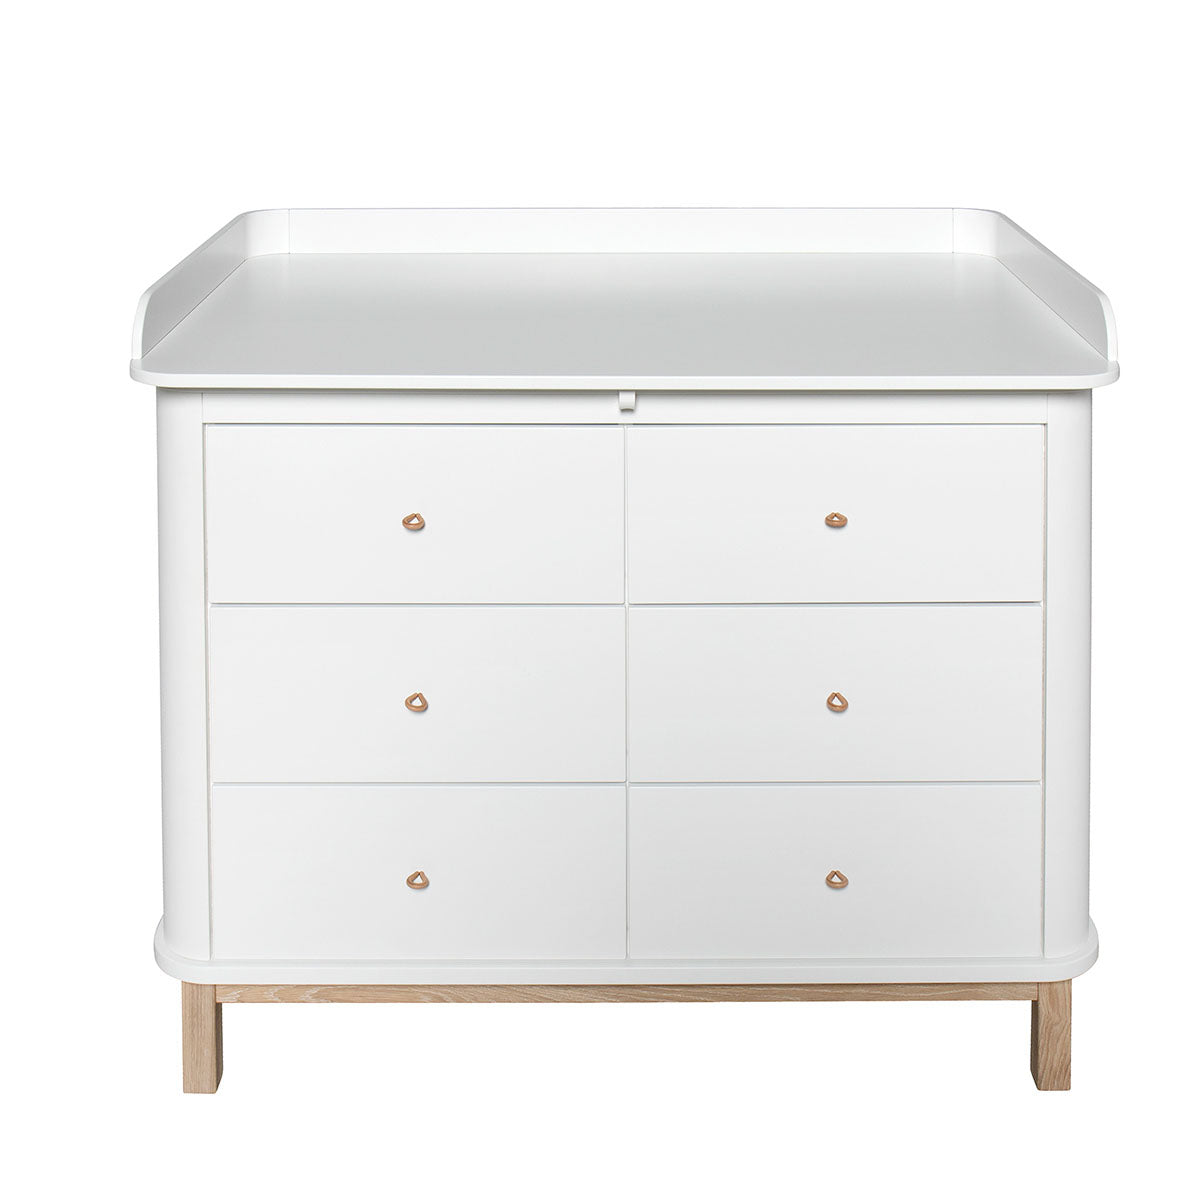 oliver-furniture-wood-nursery-plate-large-white-for-dresser-6-drawers- (2)